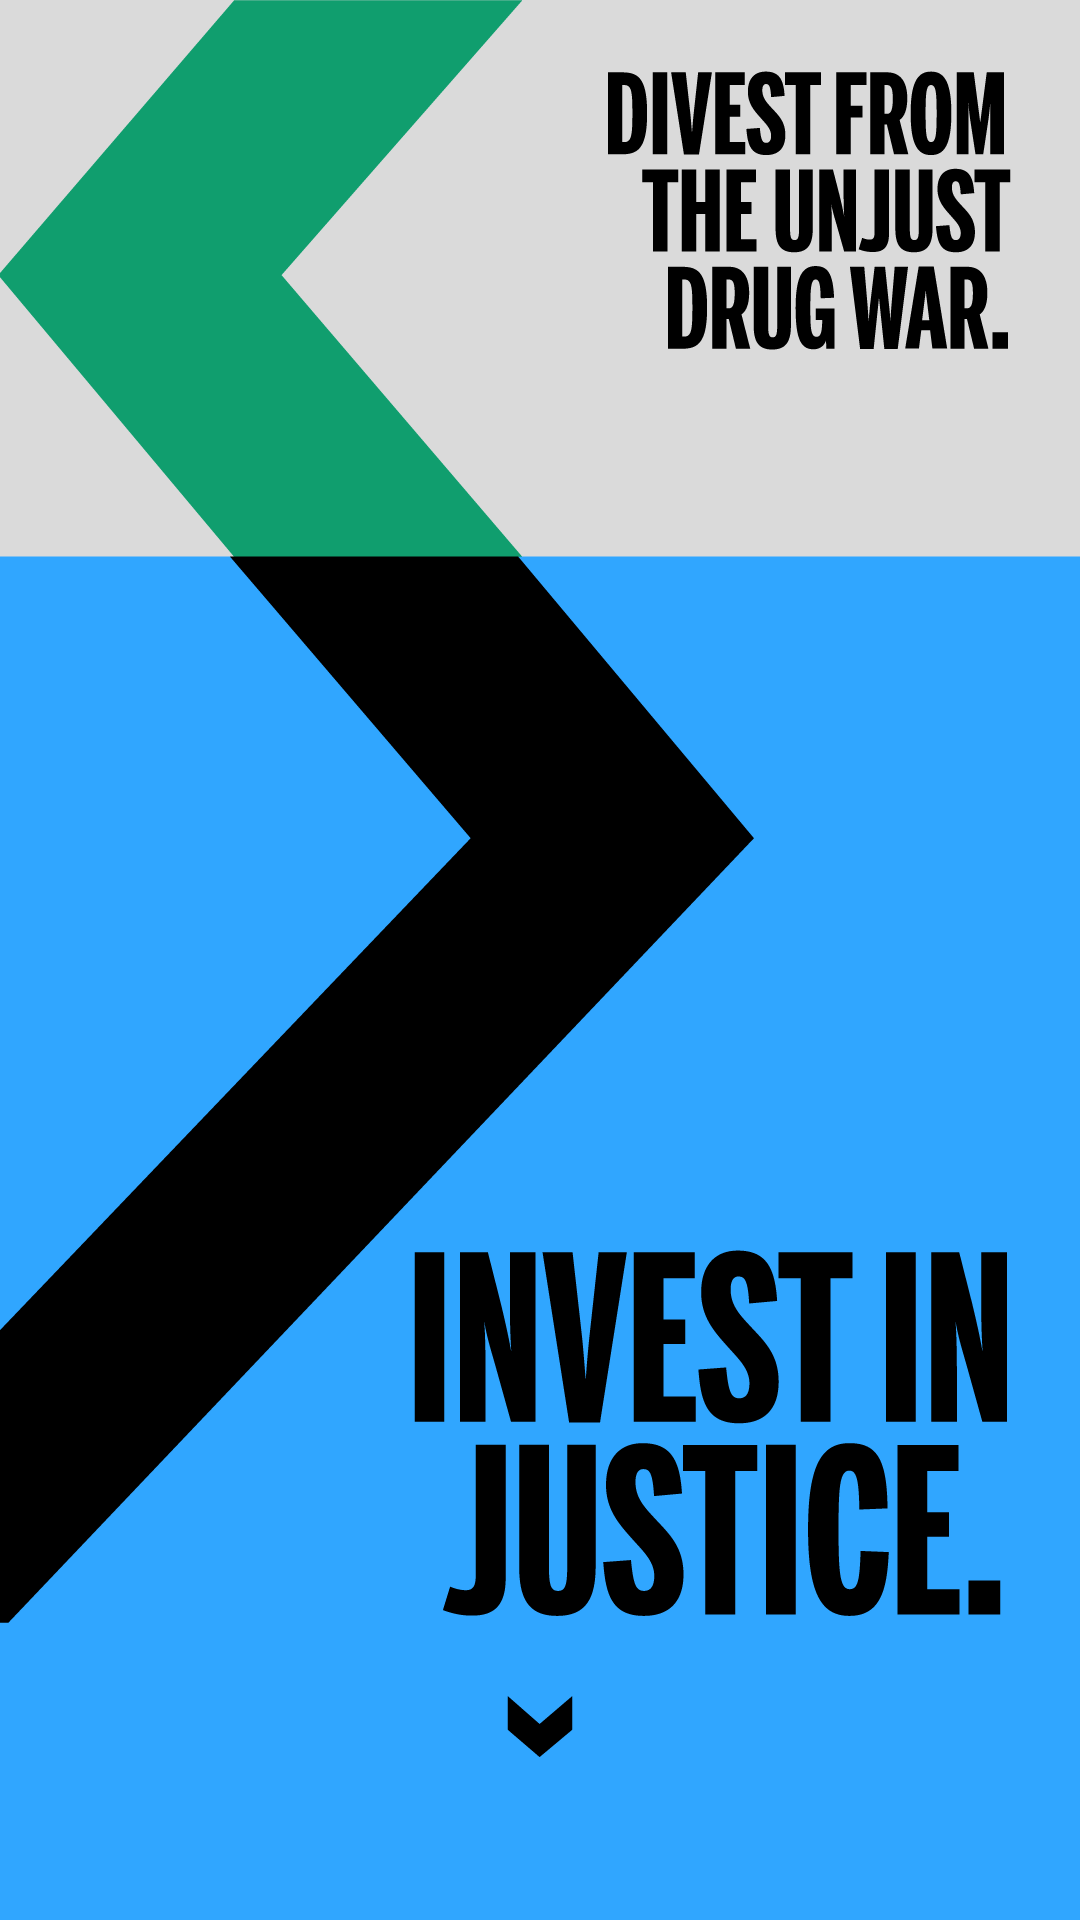 Divest from the unjust drug war. Invest in justice.